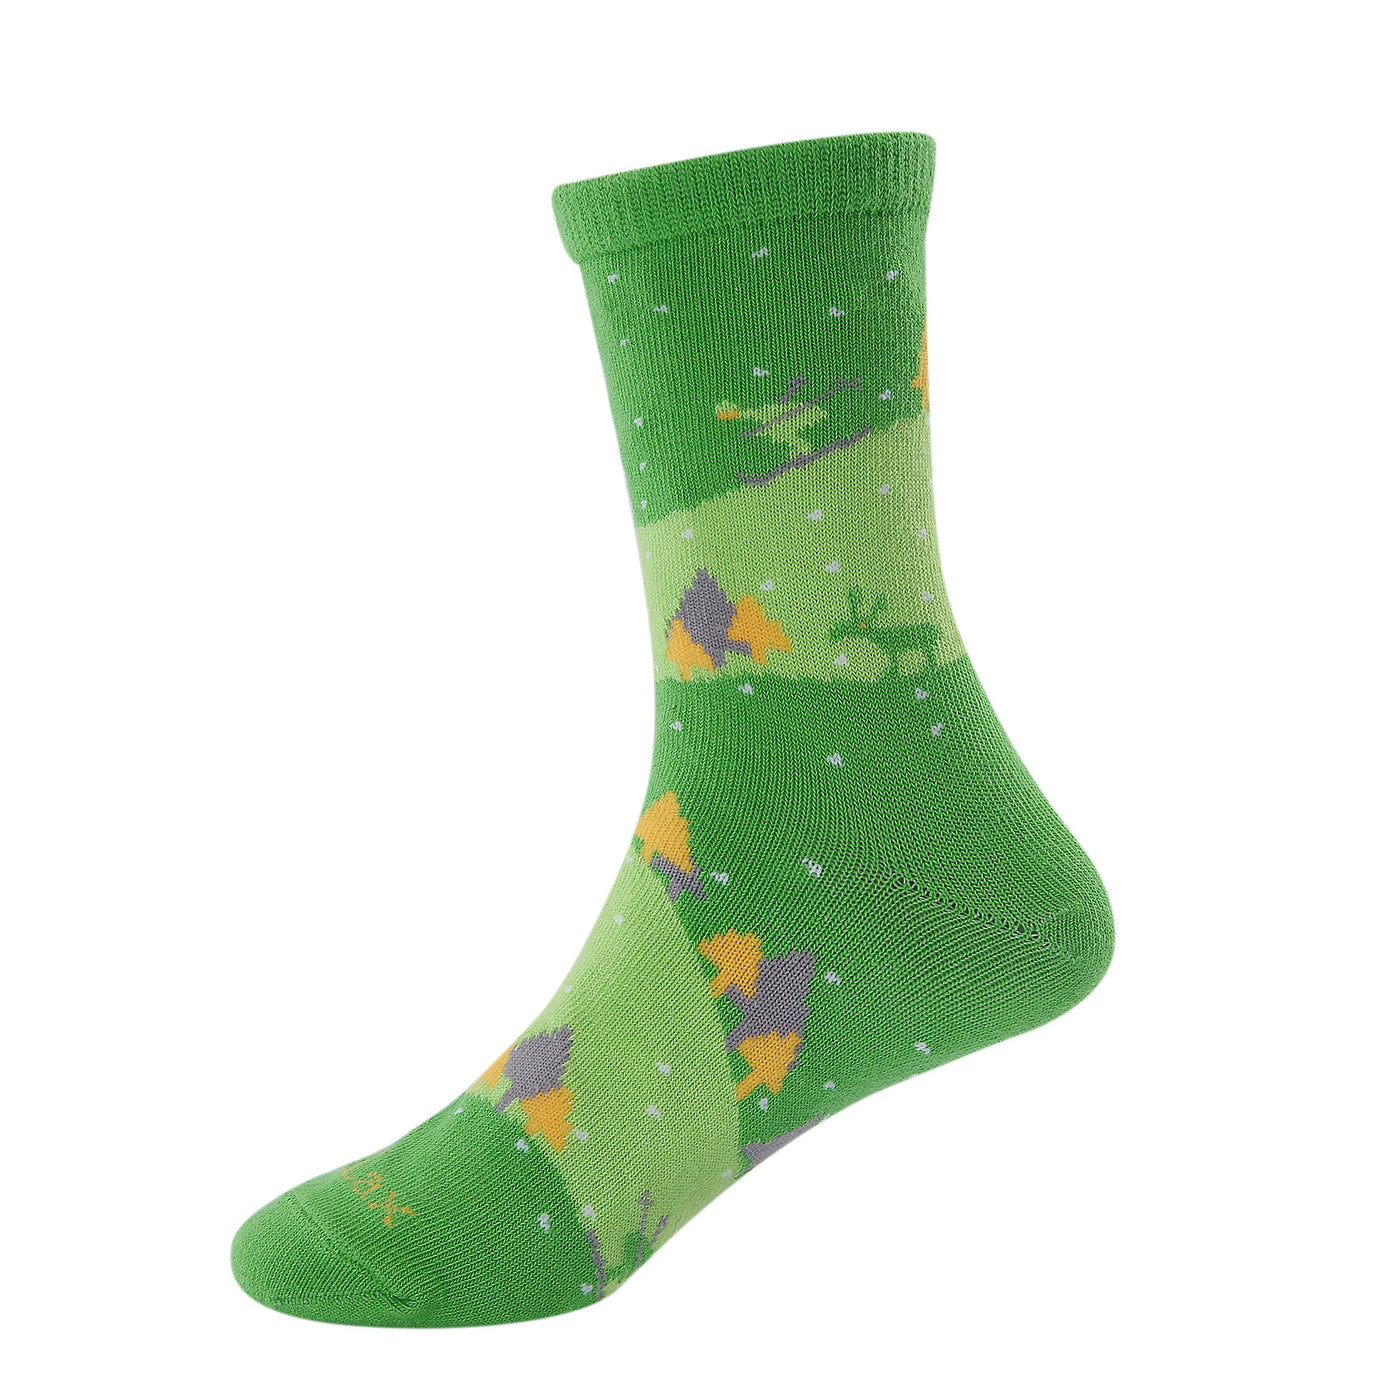 6 Pairs Combed Cotton Boy's Socks - Christmas Tree - Size UK Junior 9-11.5/Europe 27-30